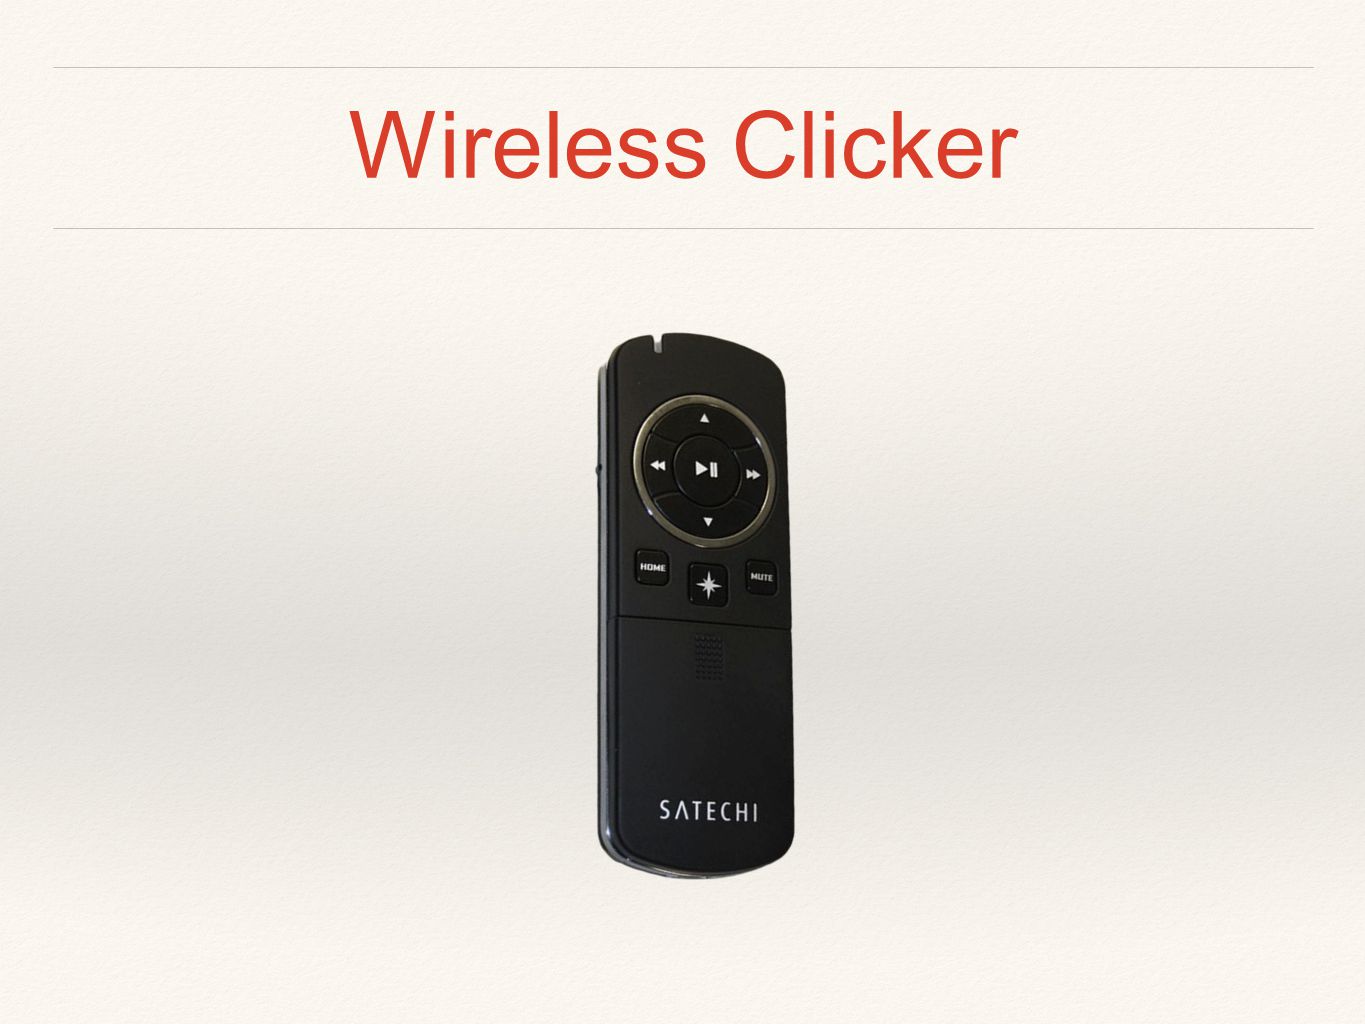 Wireless Clicker